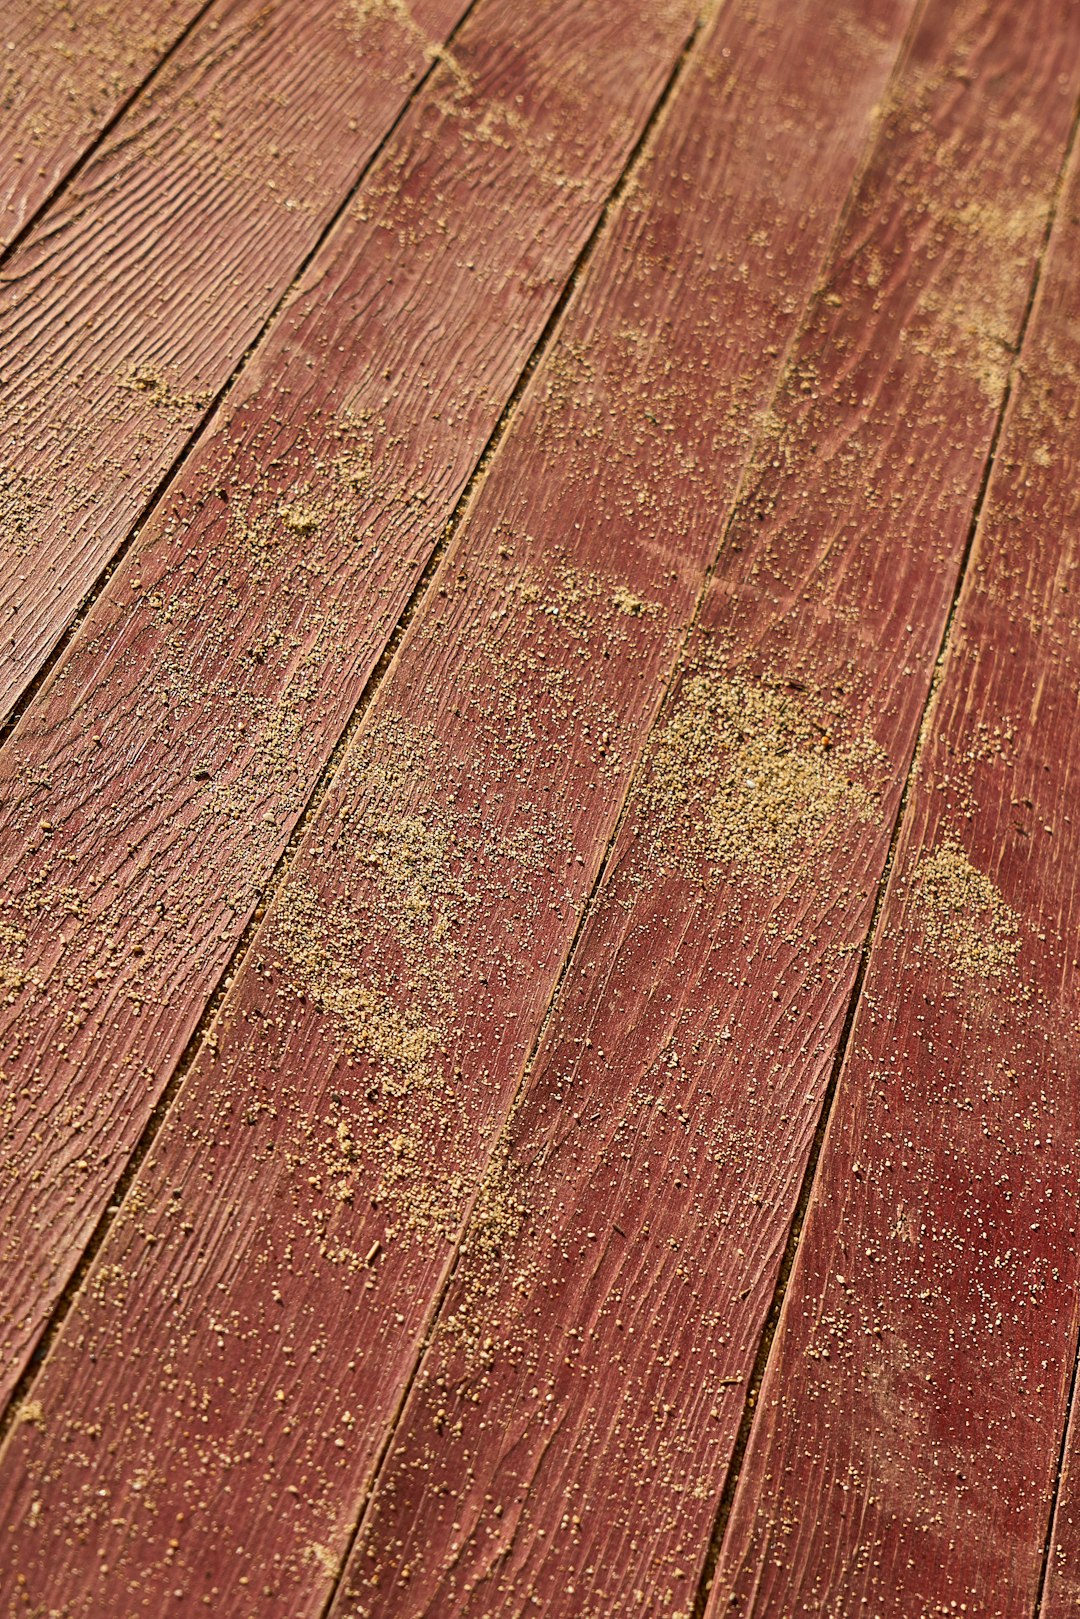 brown wooden floor during daytime